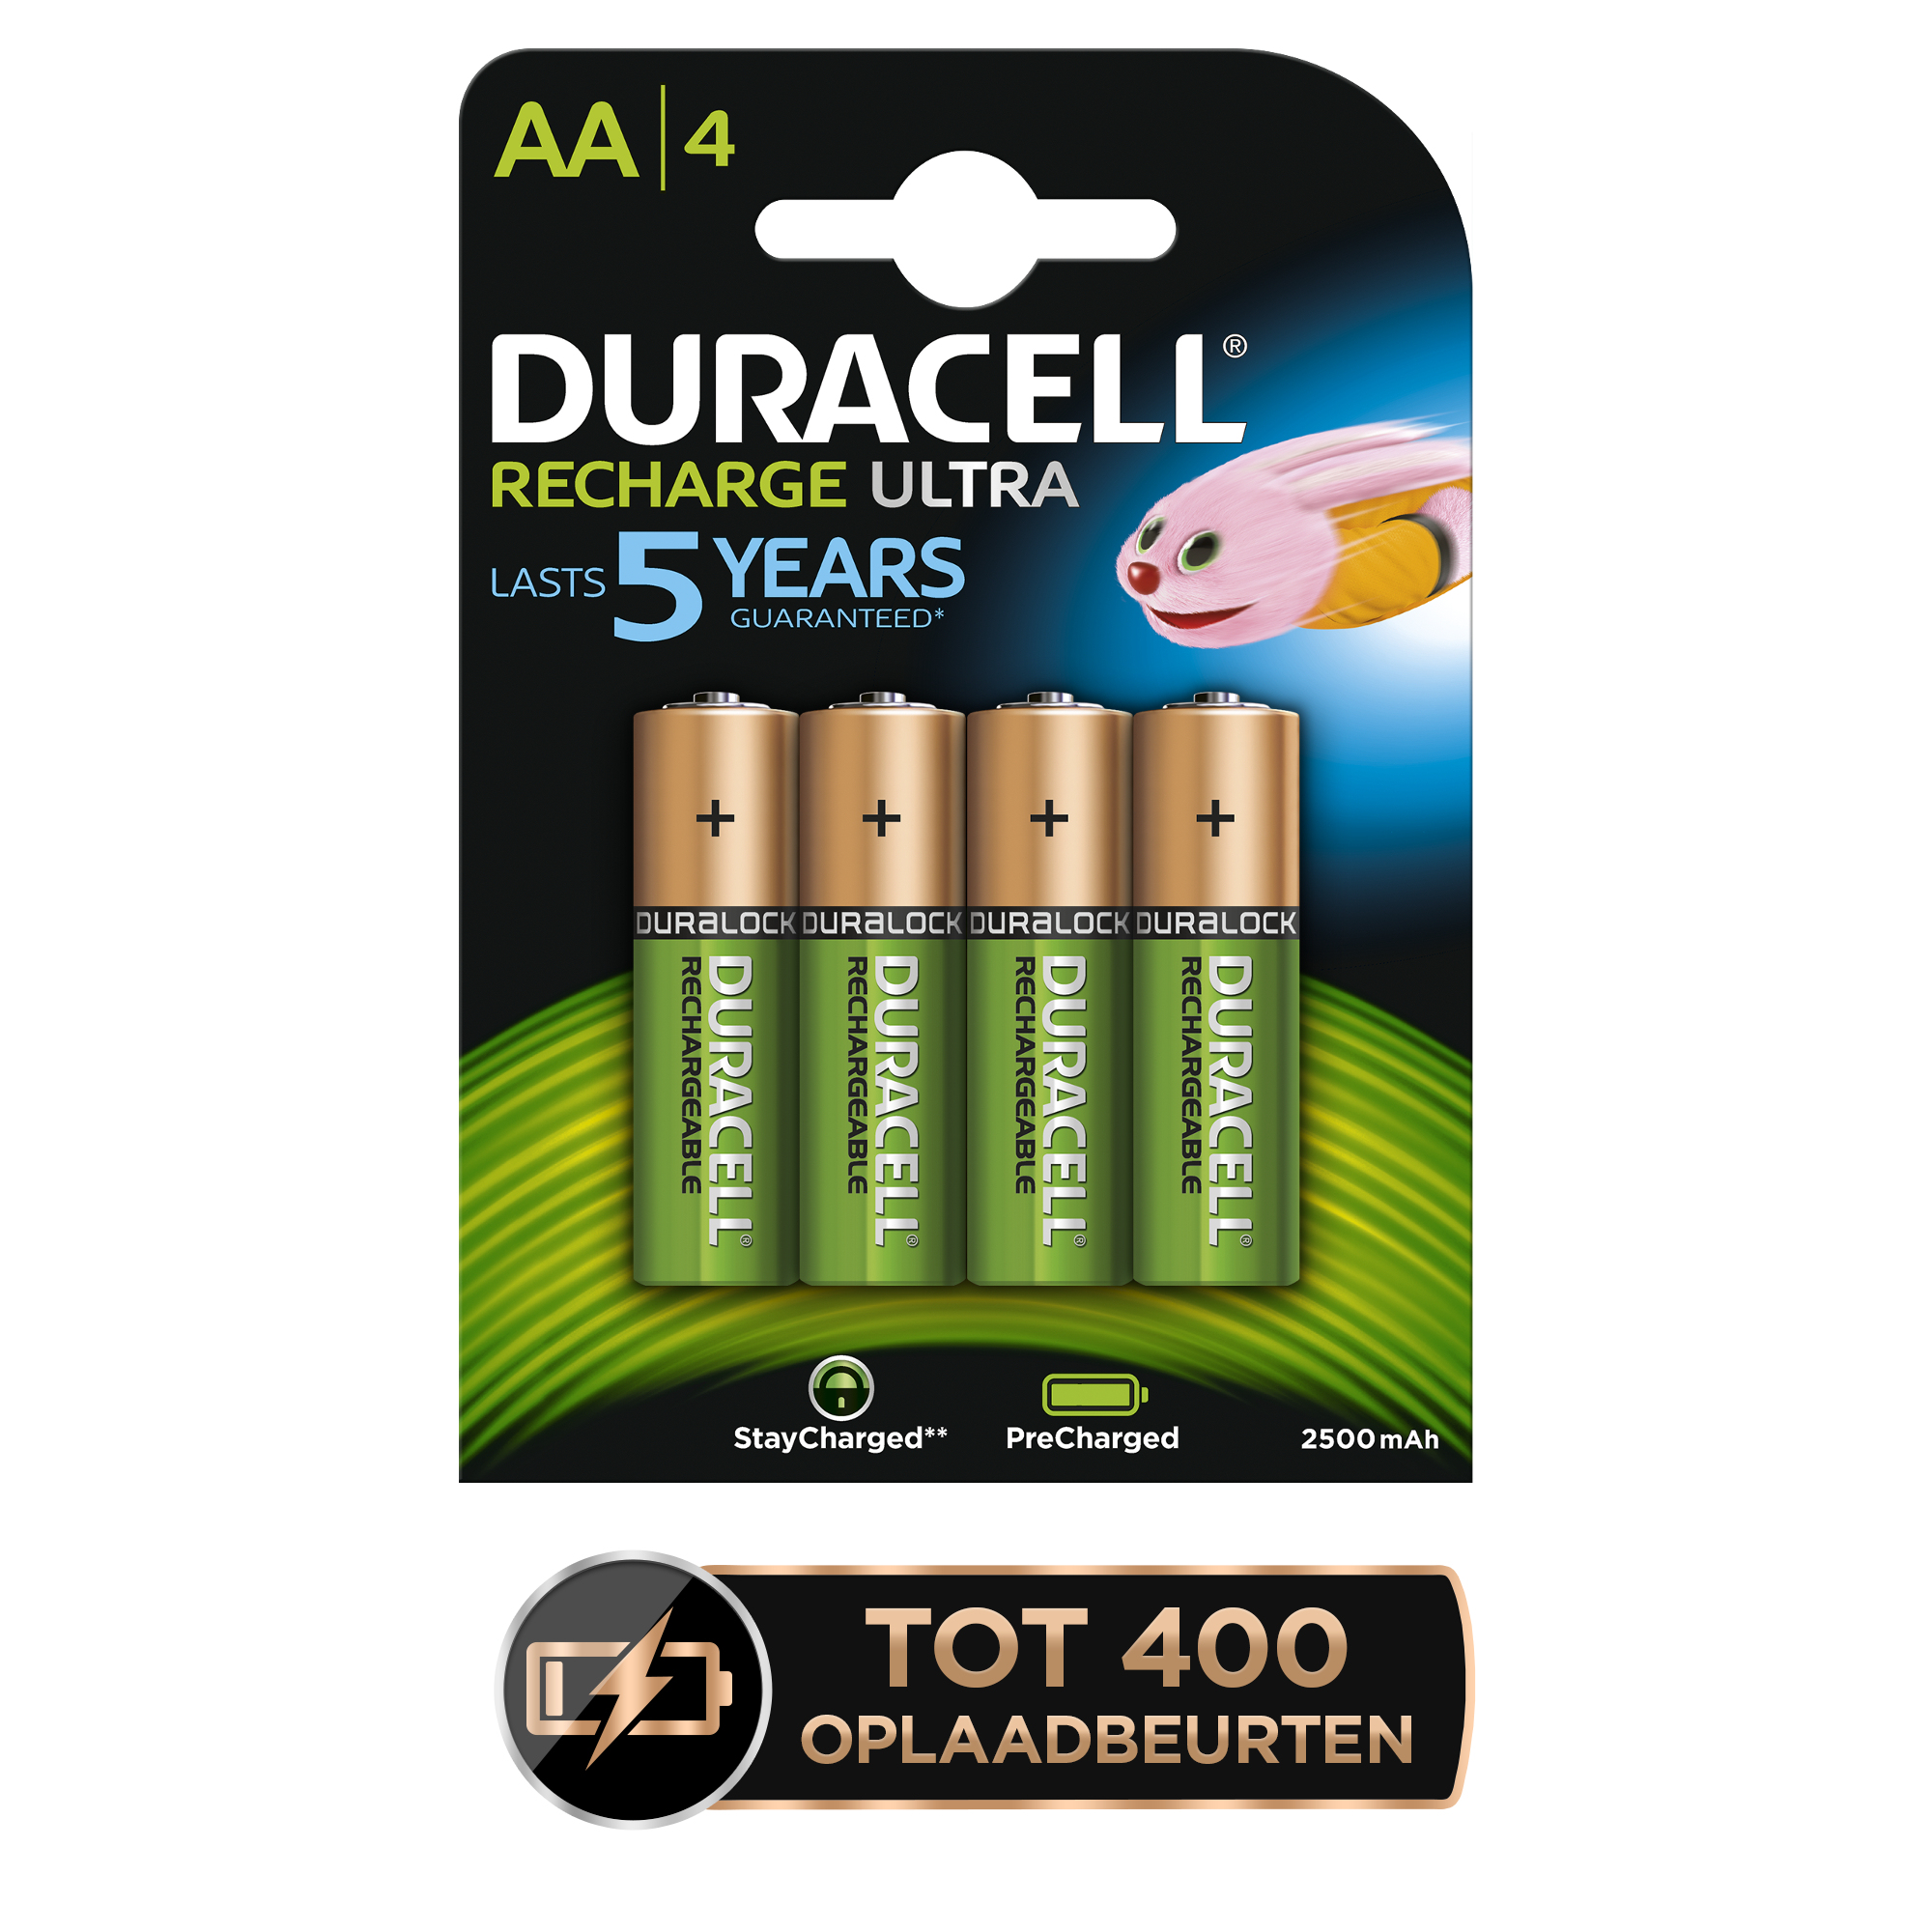 Duracell Recharge Ultra AA | 4 Stuks